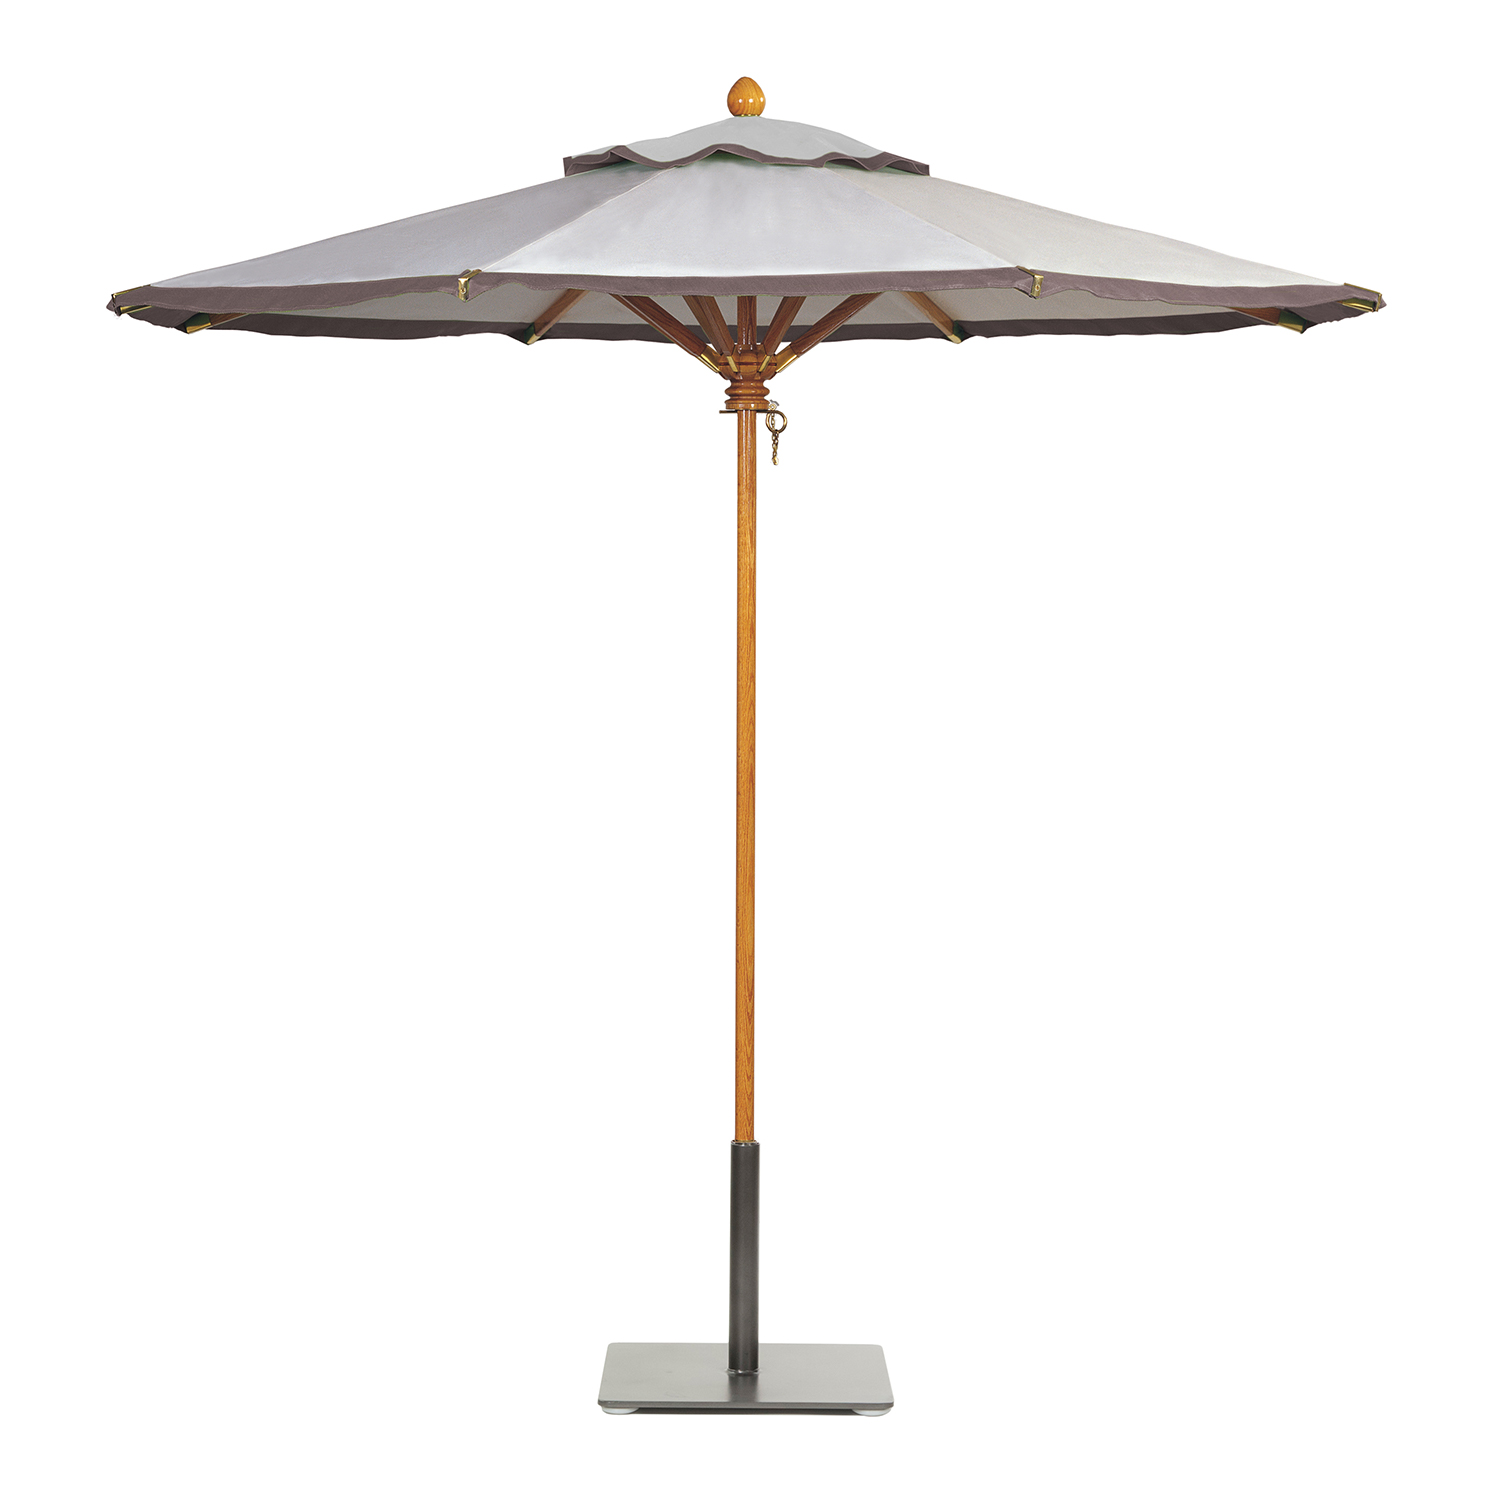 Image of Mission Terrace oak umbrella